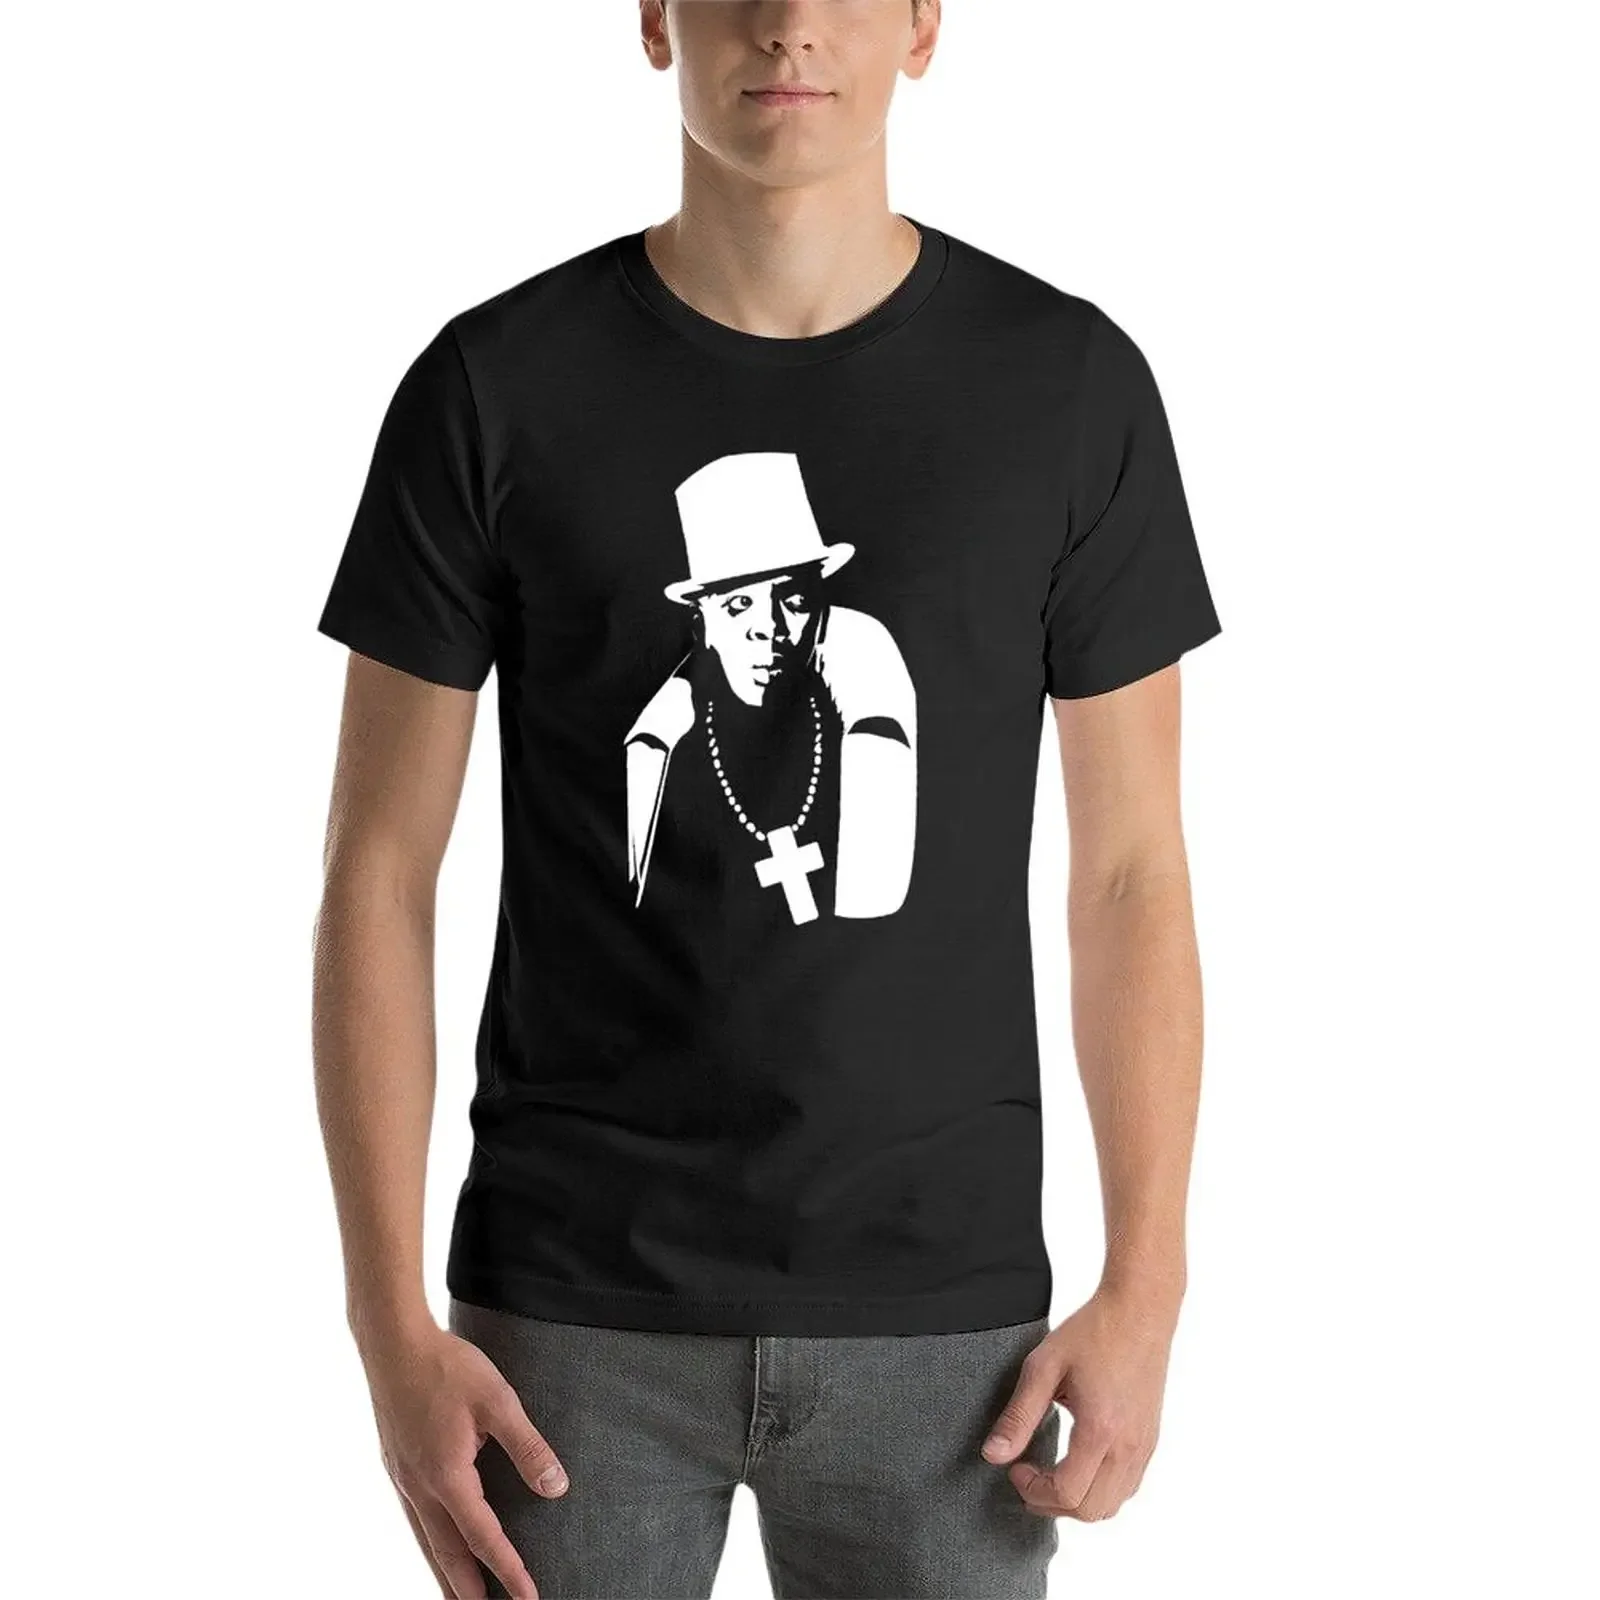 T-shirt Slim Fit Baron Samedi para homem, preto, tamanhos personalizáveis